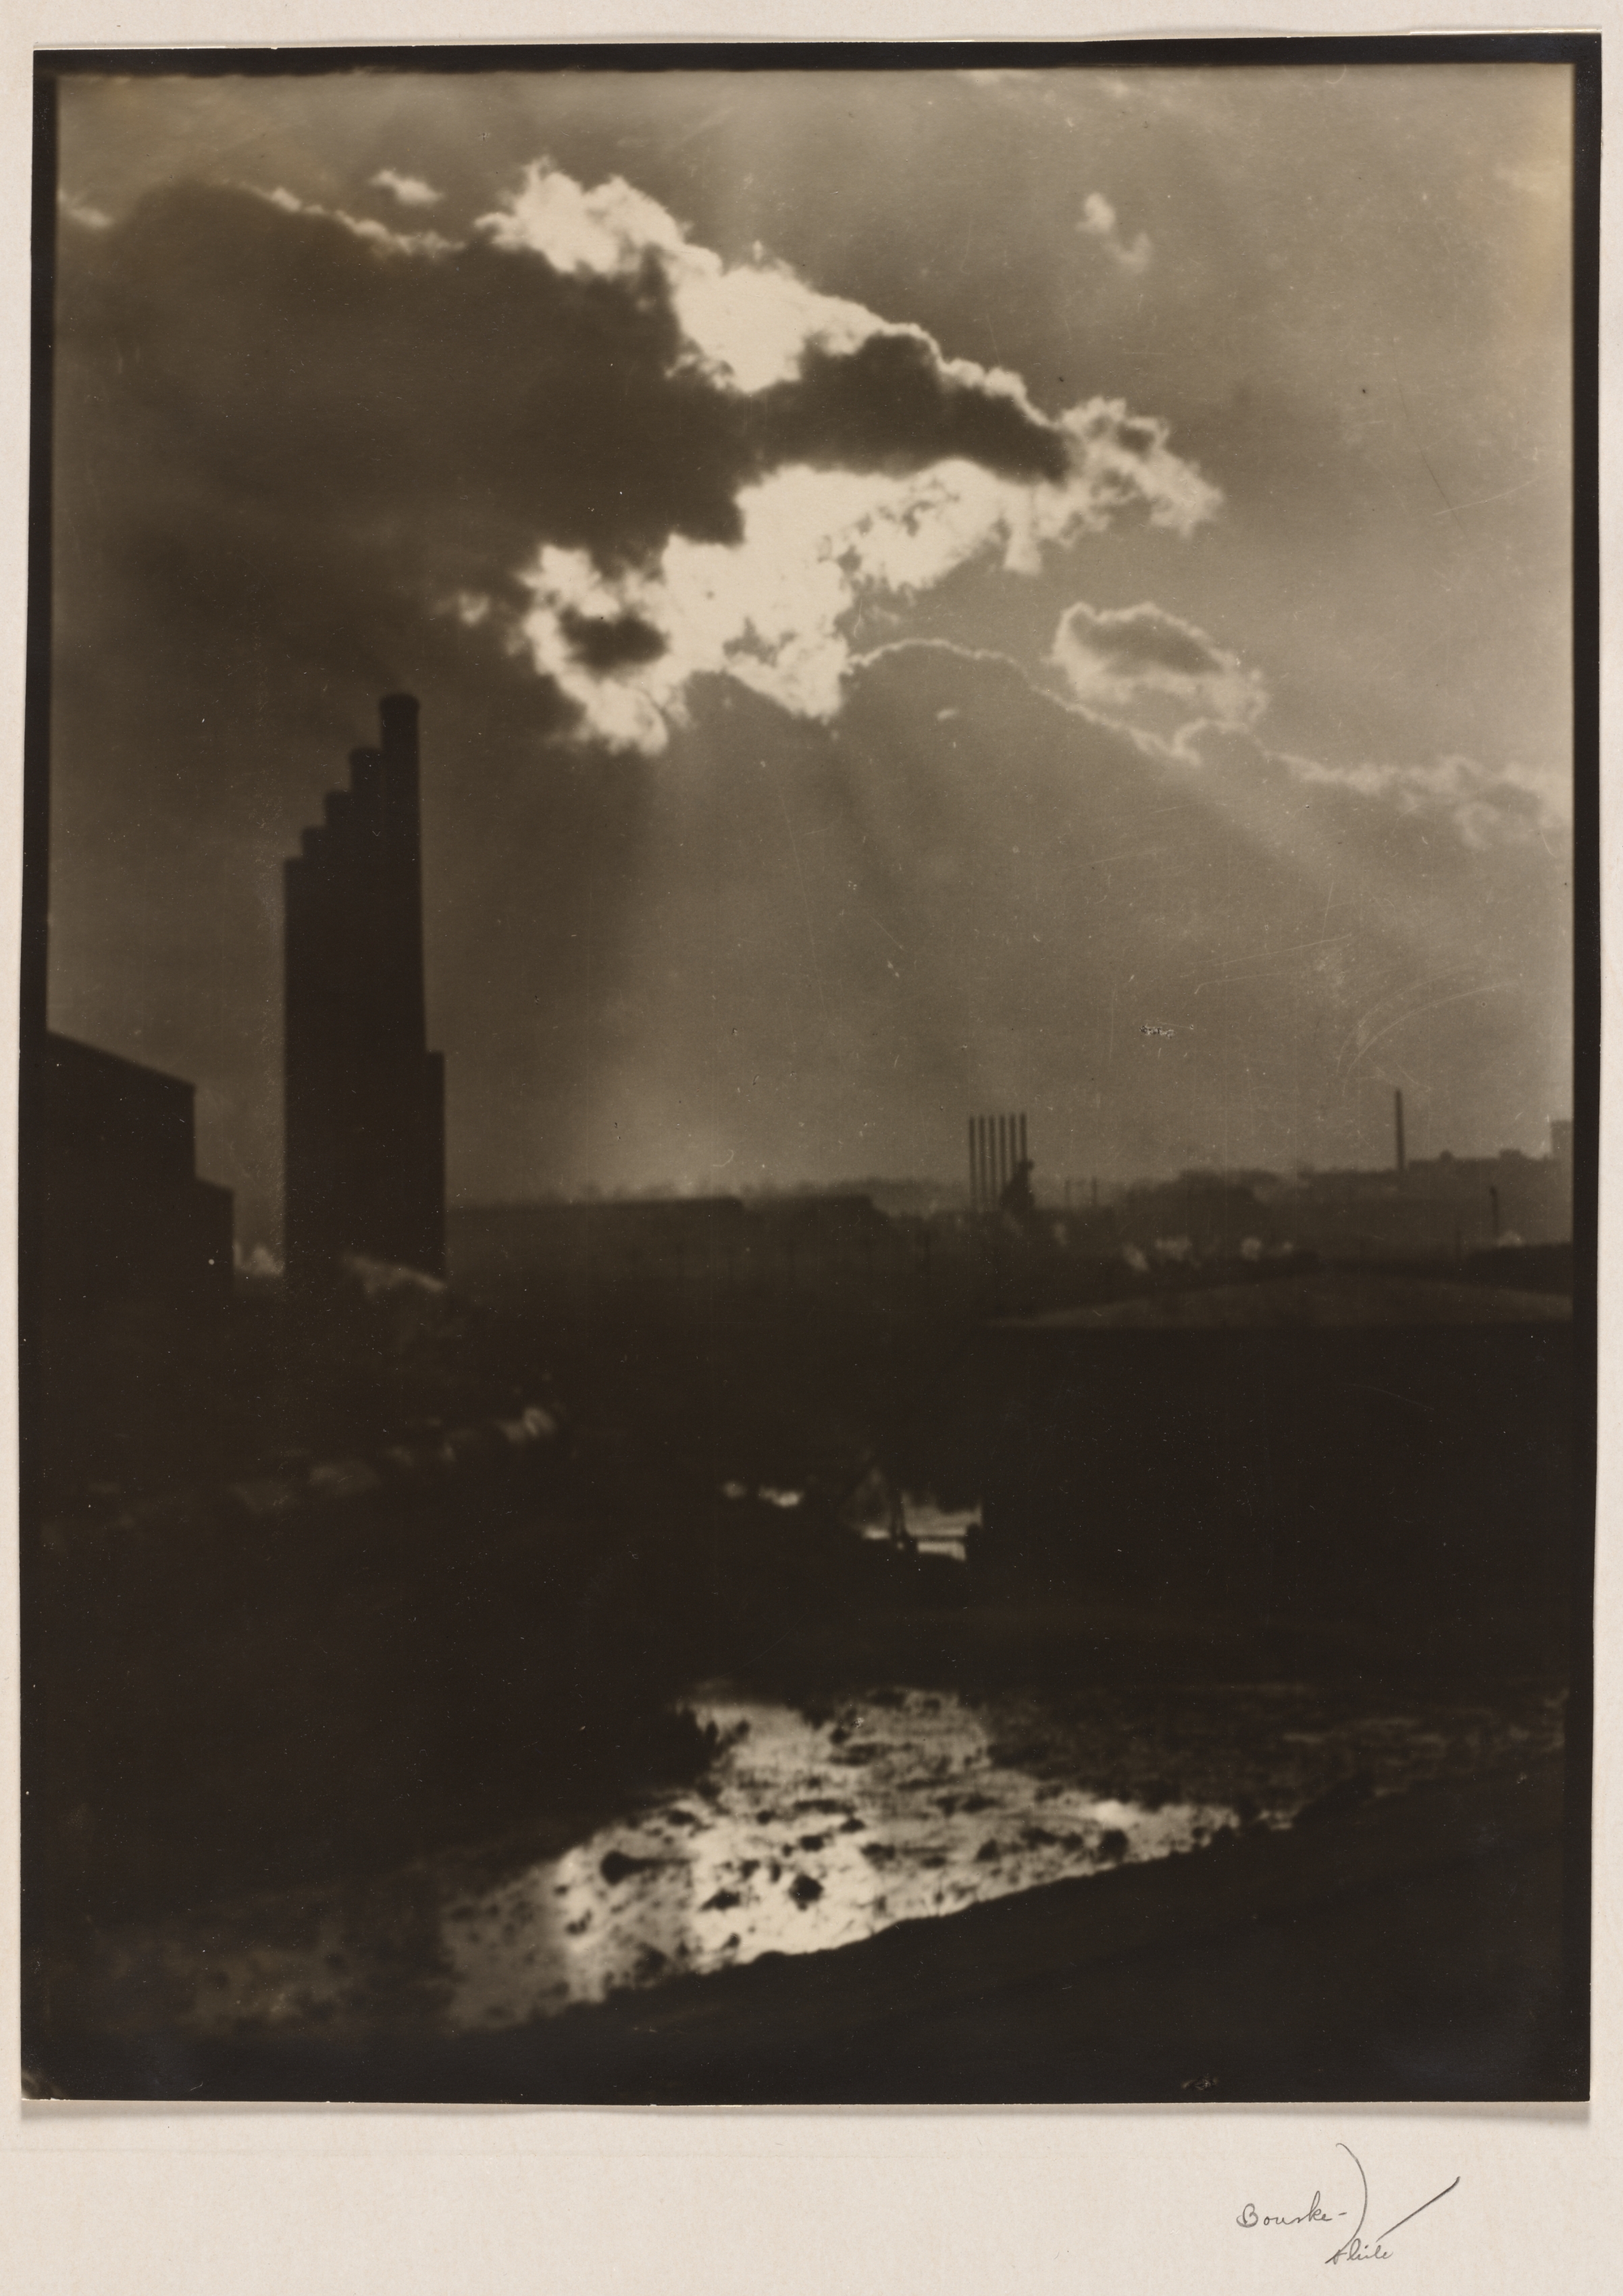 Untitled (Industrial Scene, Otis Steel Co., Cleveland)